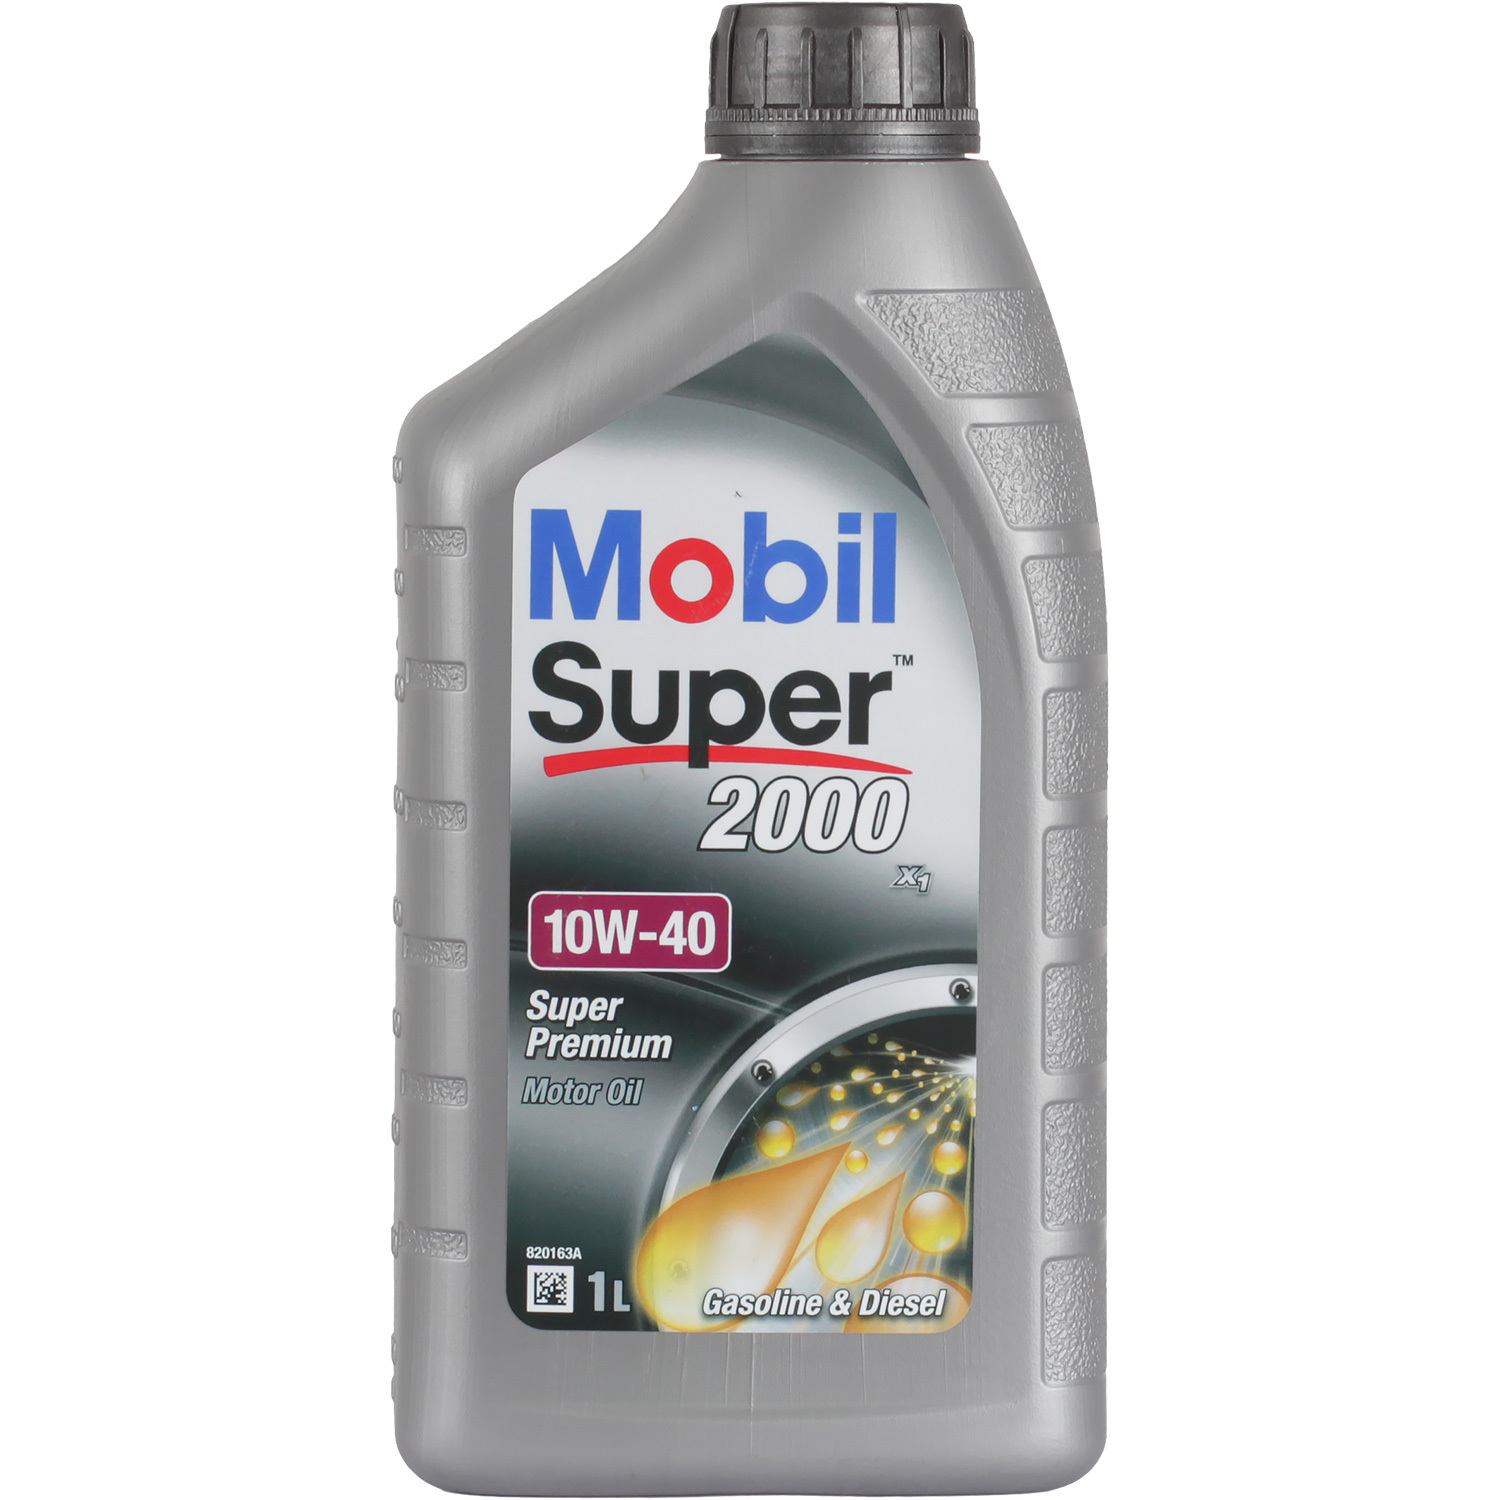 Mobil Моторное масло Mobil Super 2000 X1 10W-40, 1 л масло моторное mobil super 3000 x1 5w 40 1 л синтетика